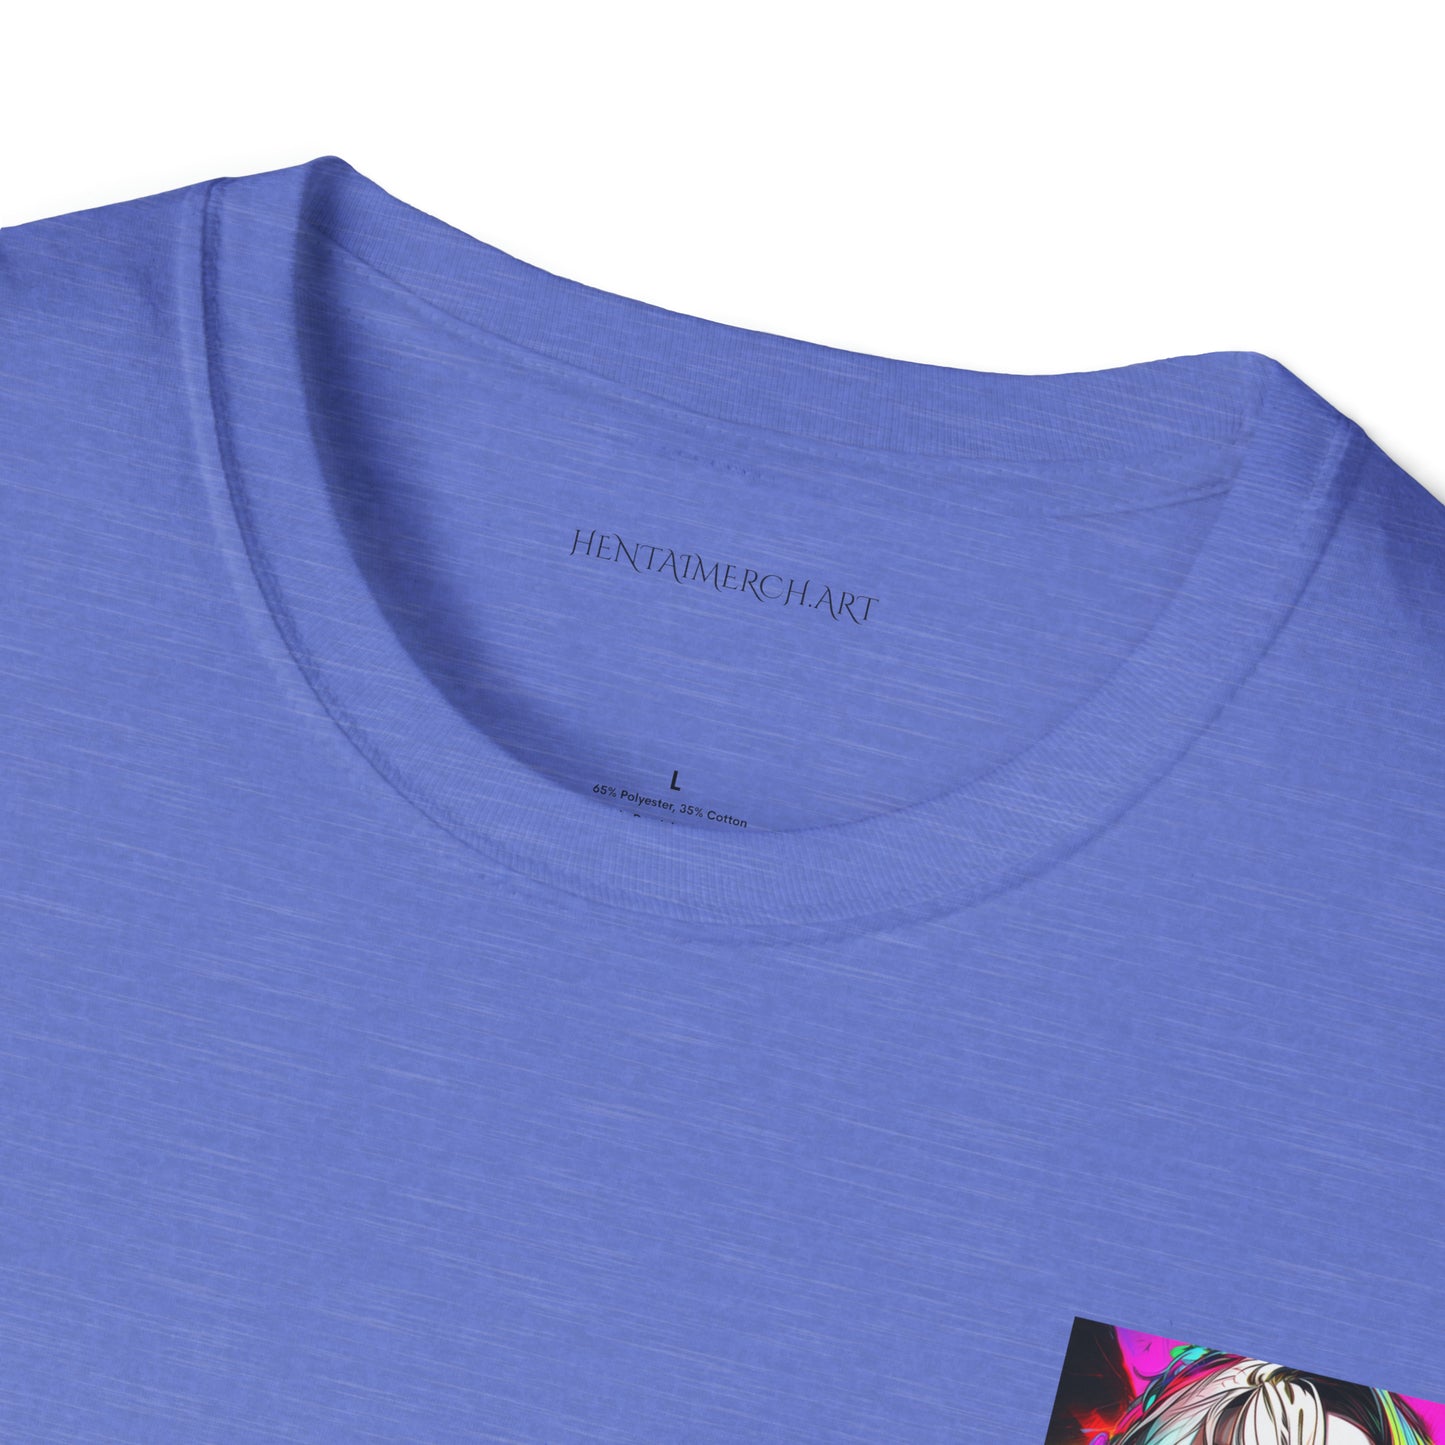 Hentai is Art [Design #4] - Unisex Softstyle T-Shirt